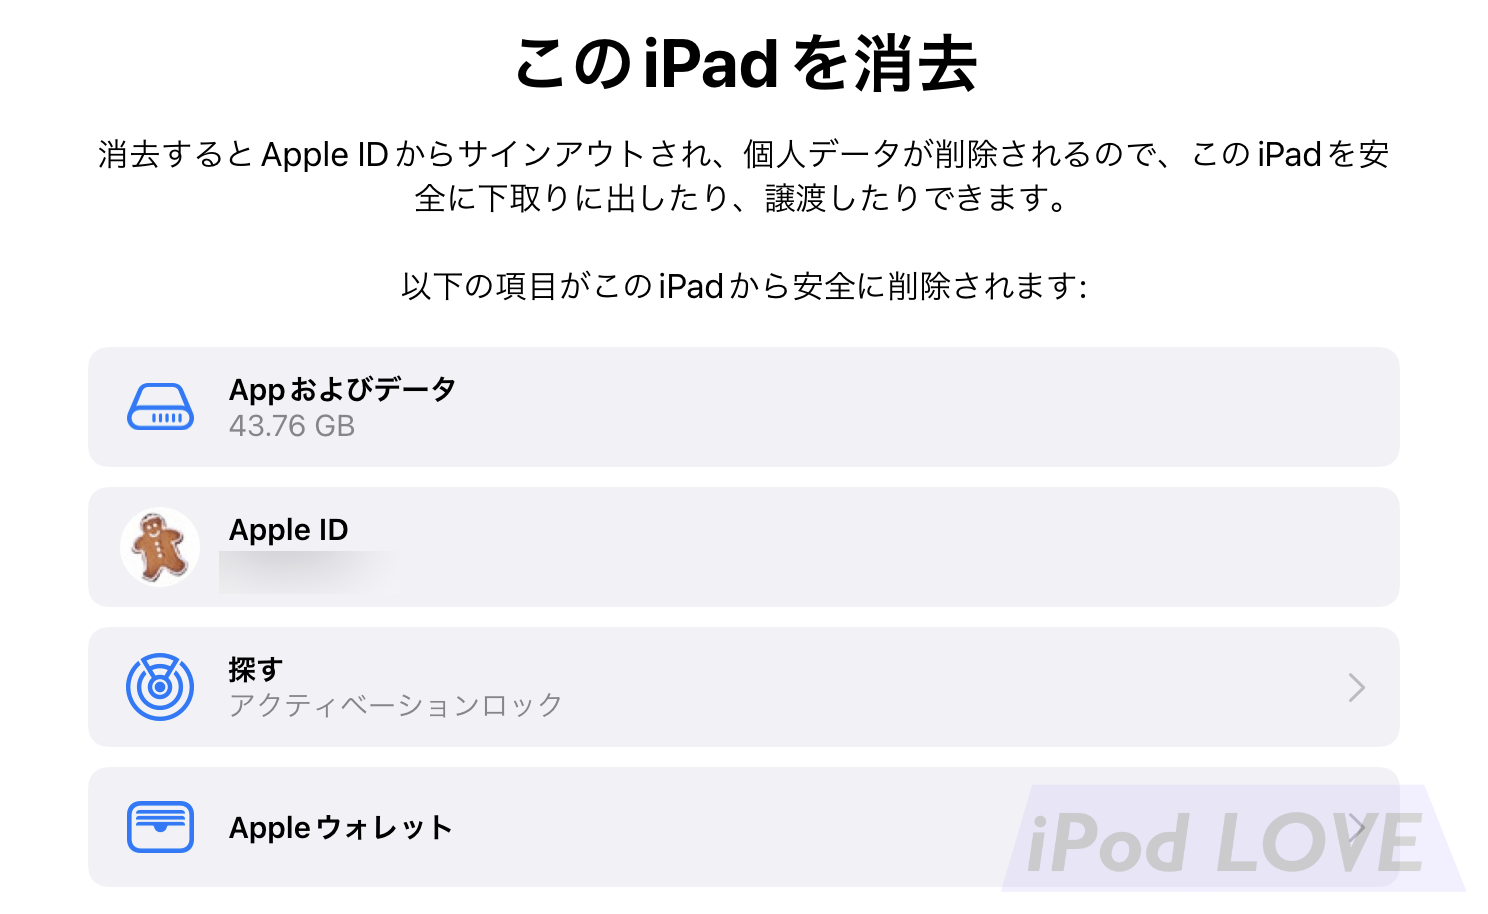 Clear storage full iPhone iPad 16